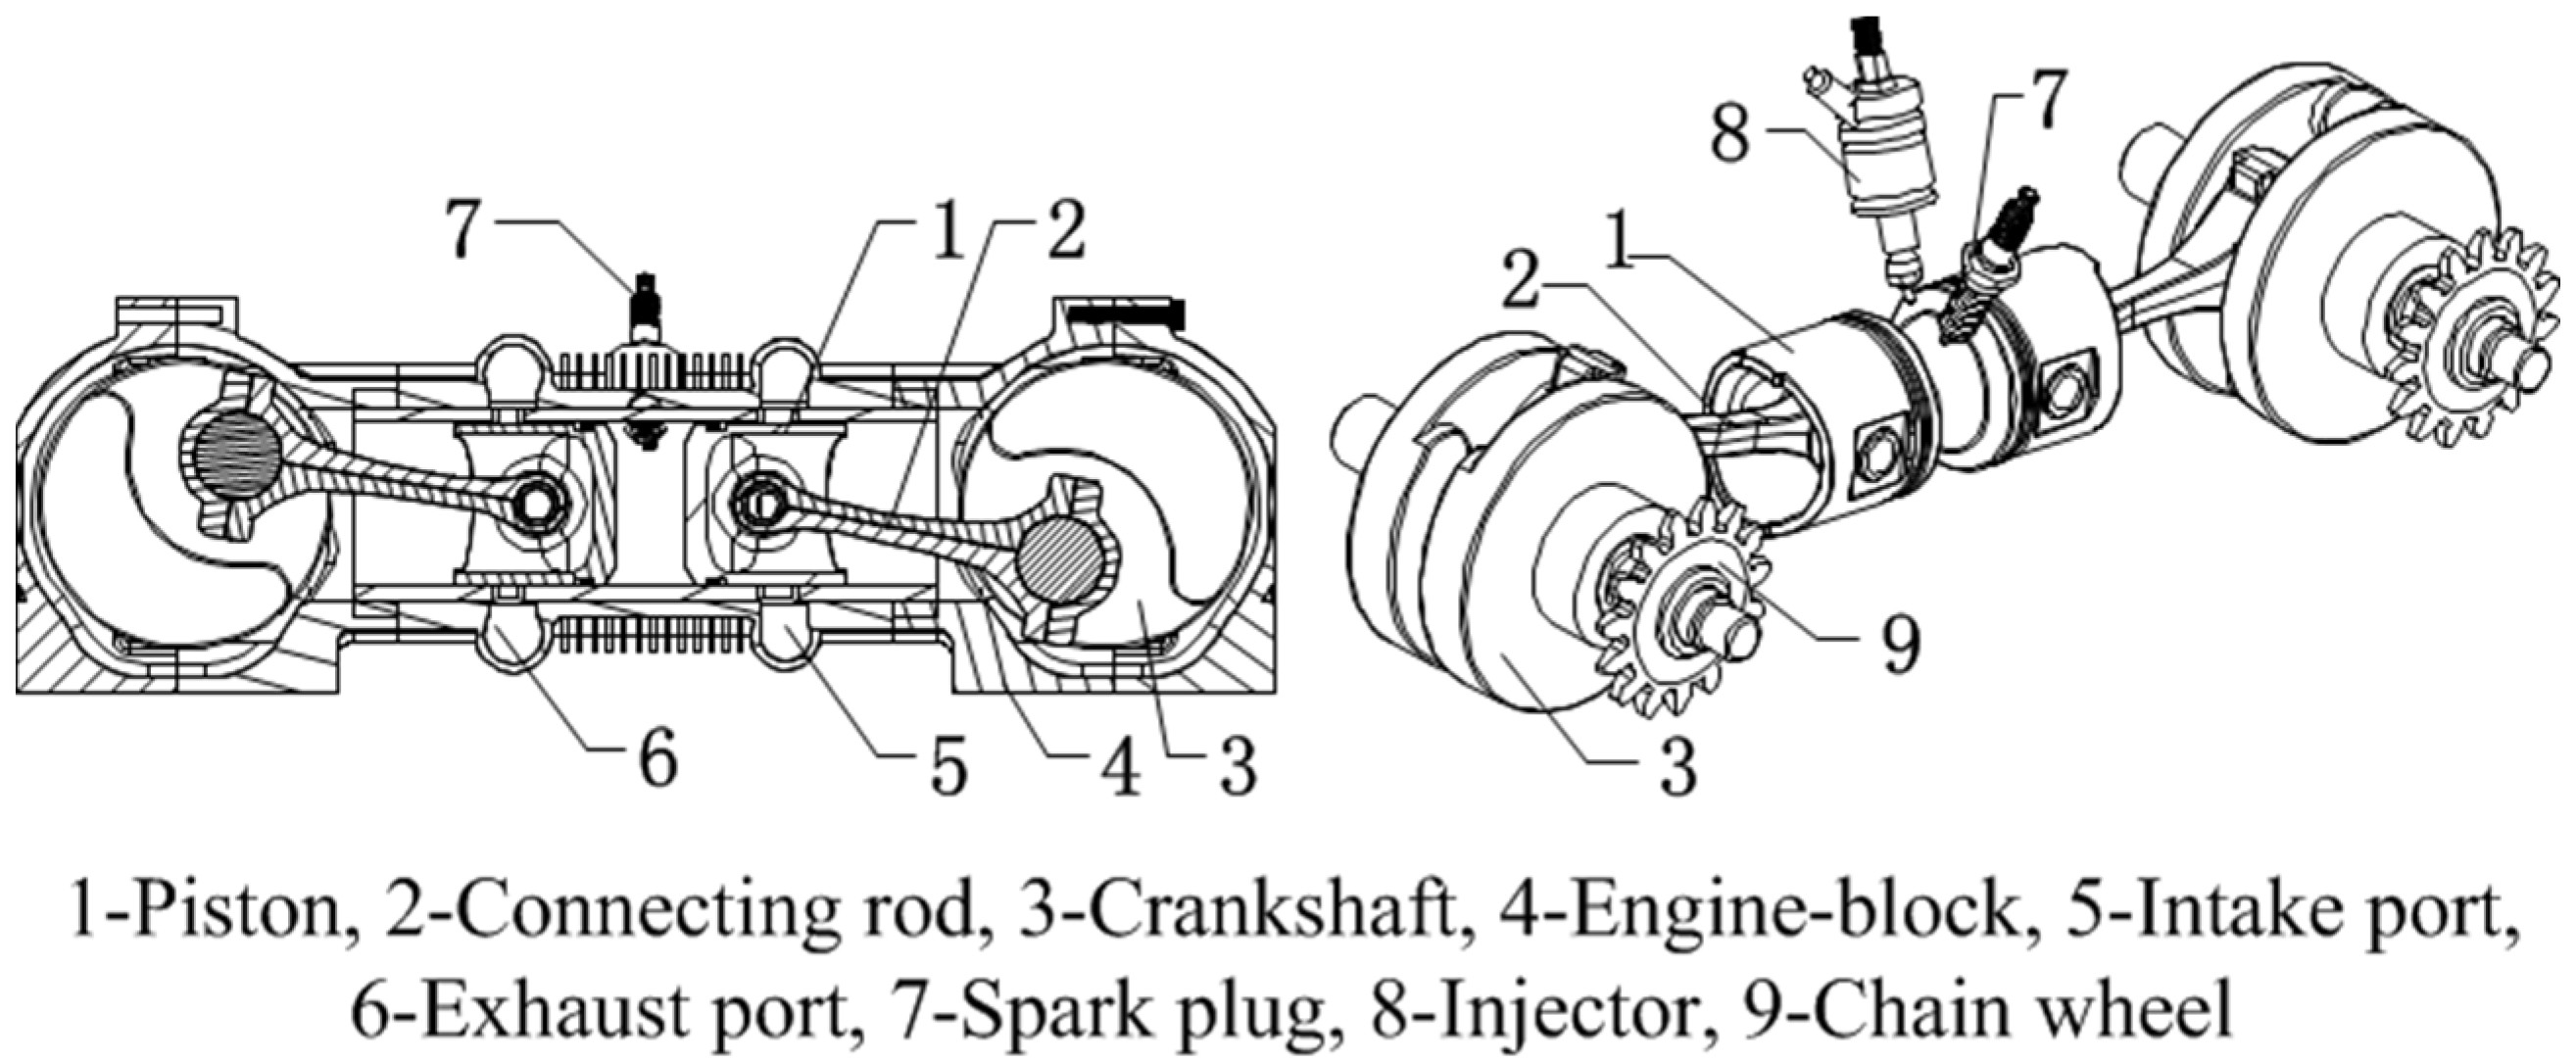 Diagram Of A 4 Stroke Engine Energies Free Full Text Of Diagram Of A 4 Stroke Engine